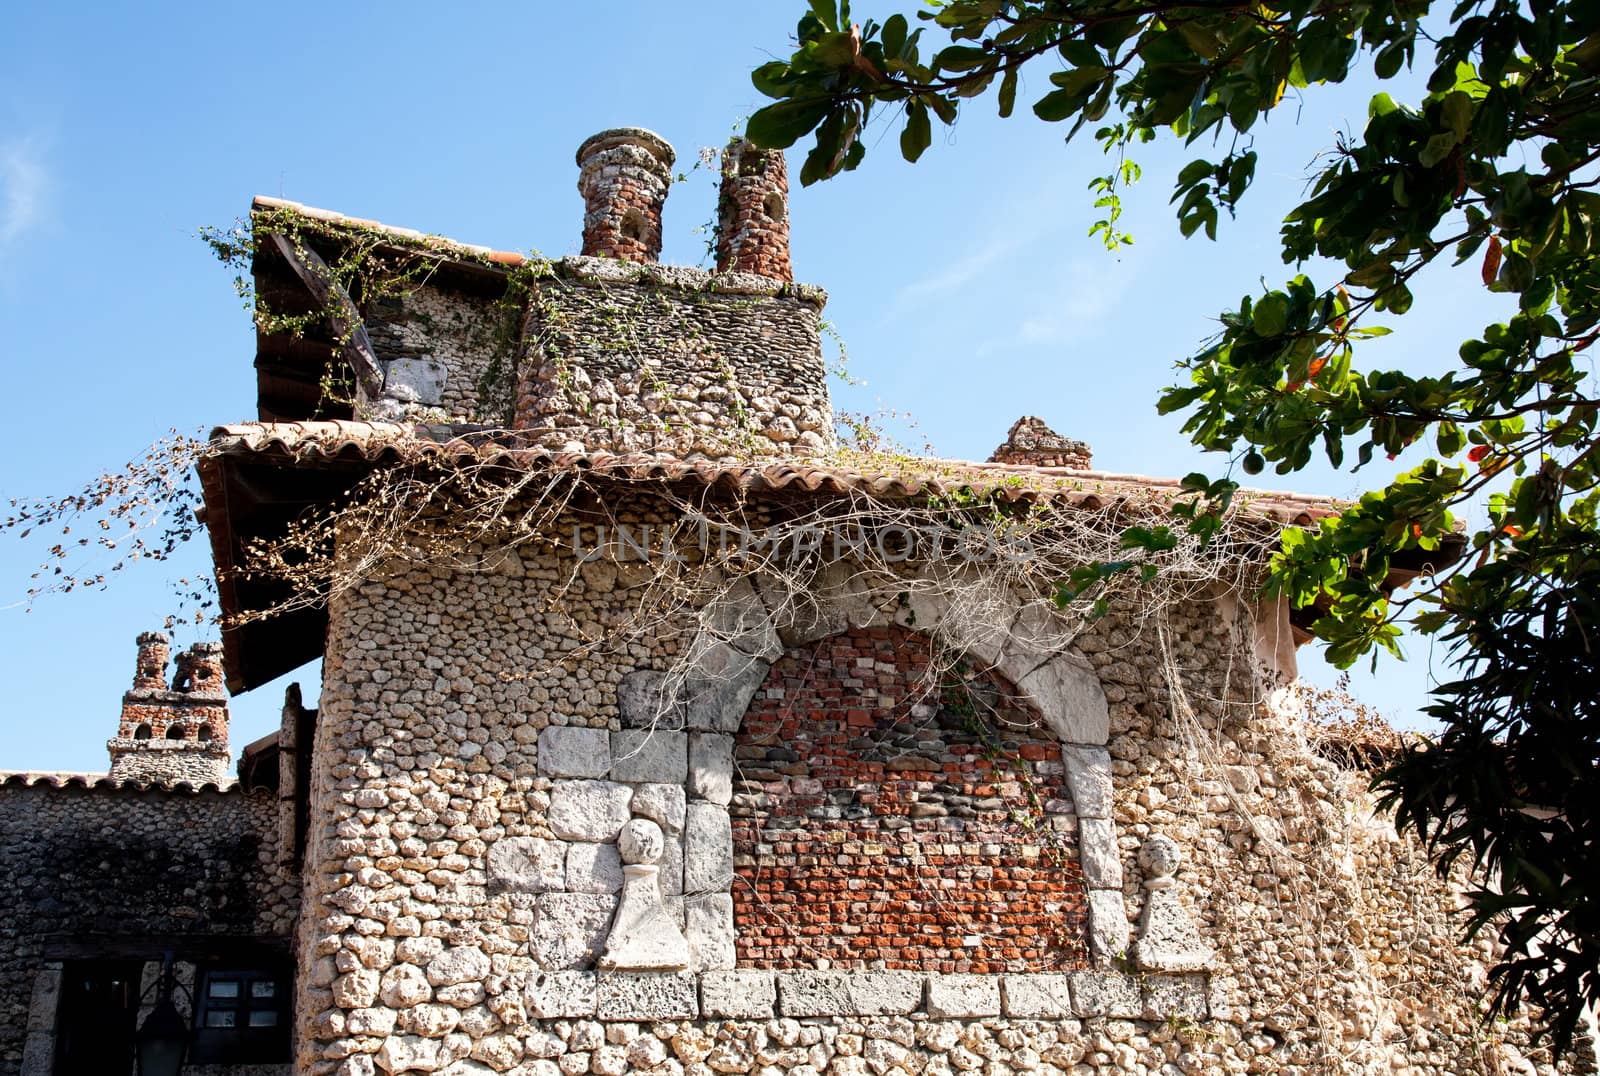 Stone house in altos de chavon by RawGroup